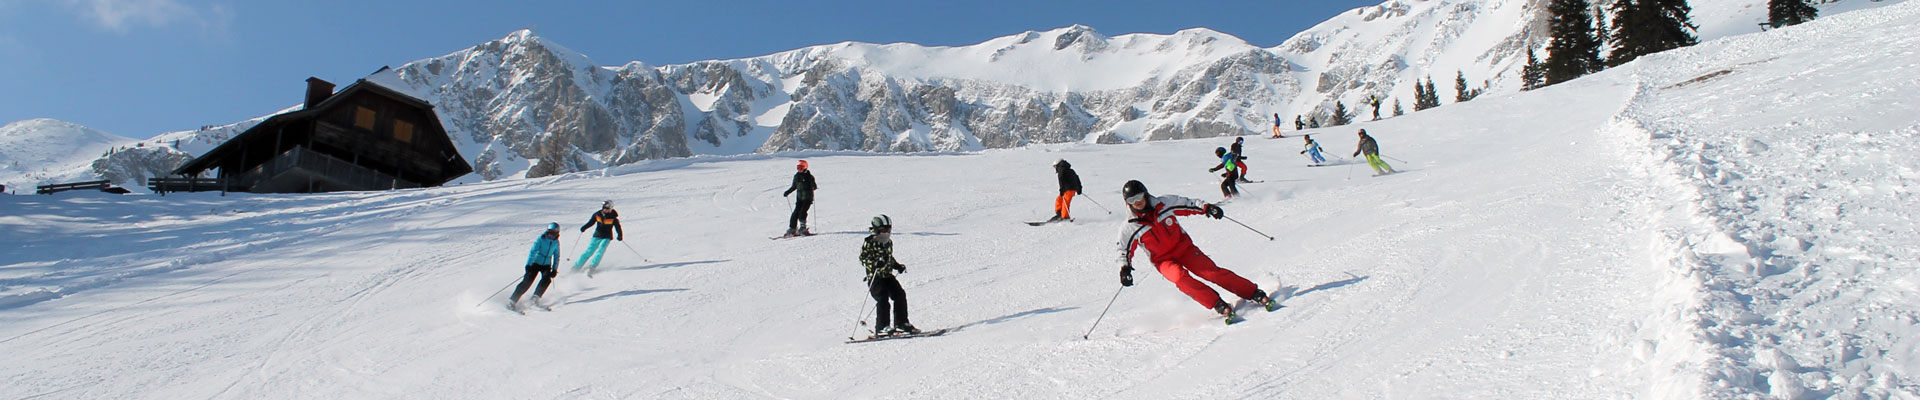 Beitragsbild-Skifahrer